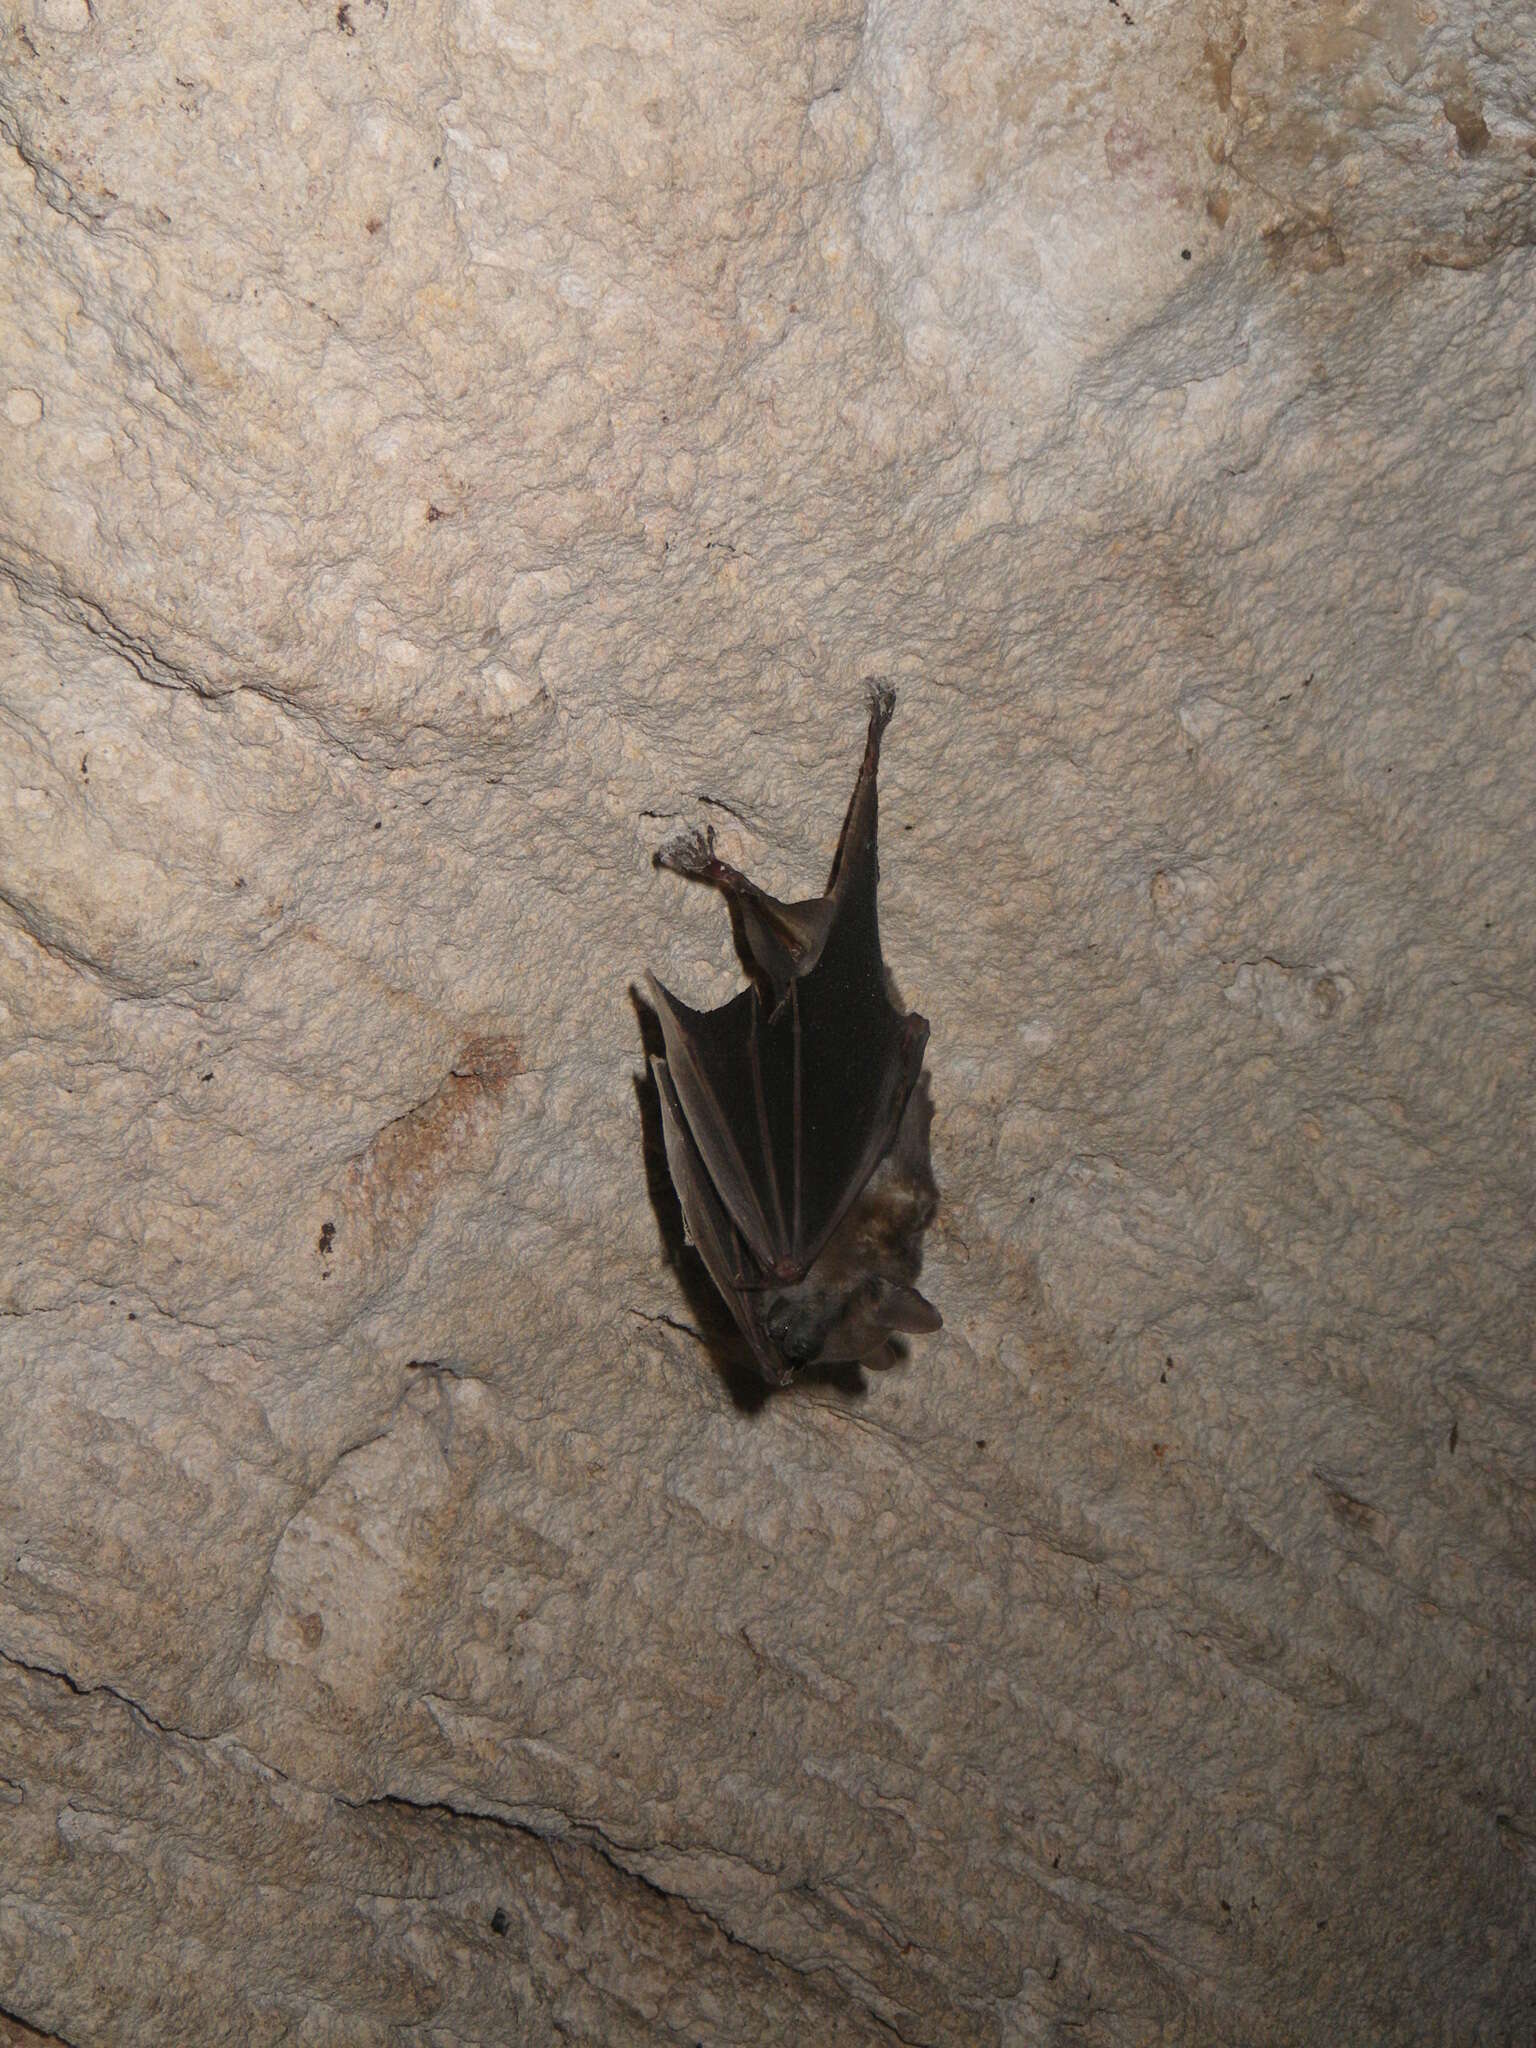 Image of Cuban Fruit-eating Bat